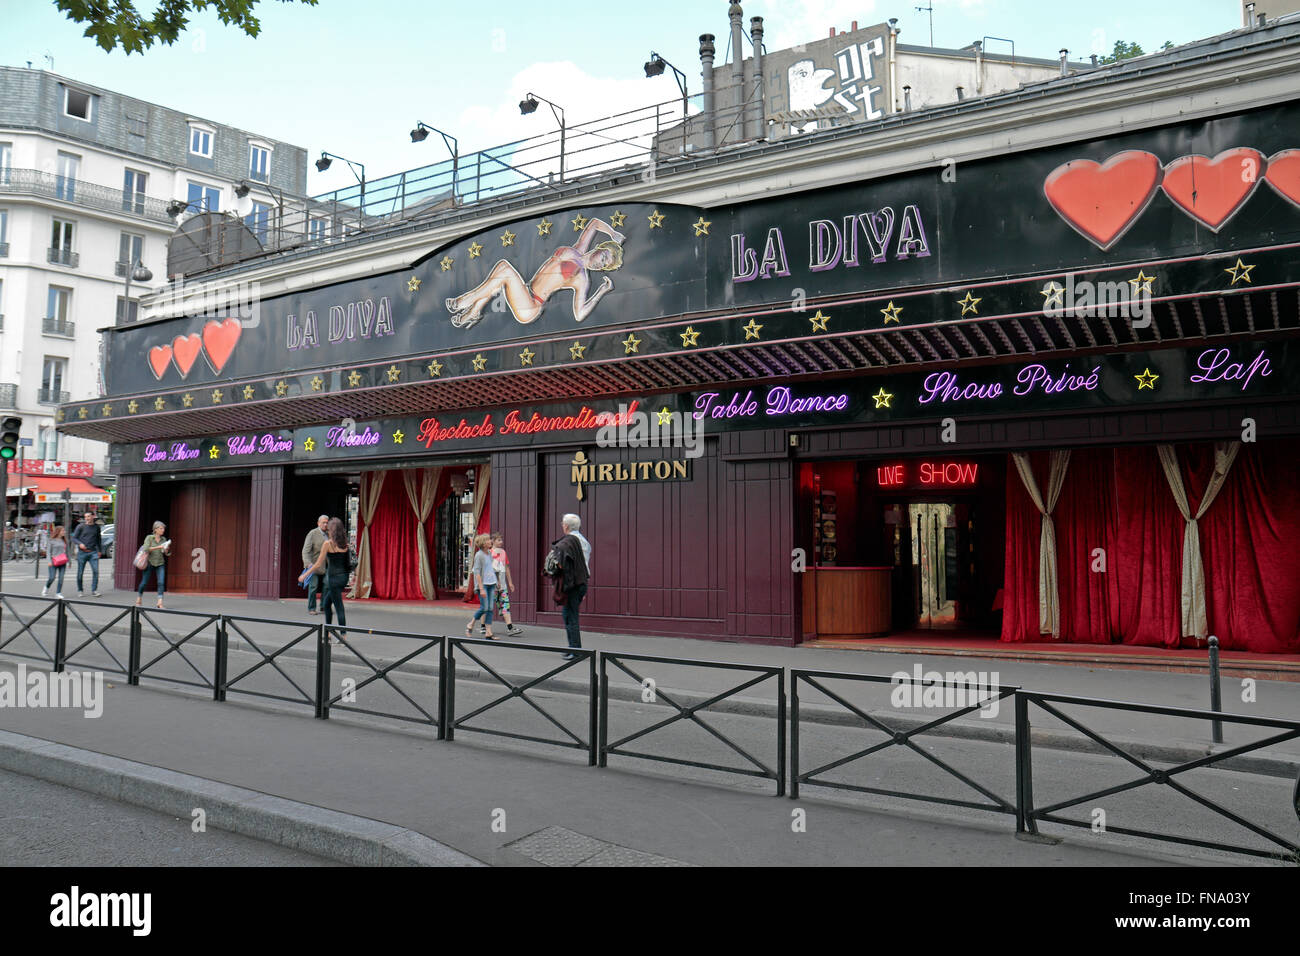 The La Diva live dancing club (or strip club) in Paris, France Stock Photo  - Alamy